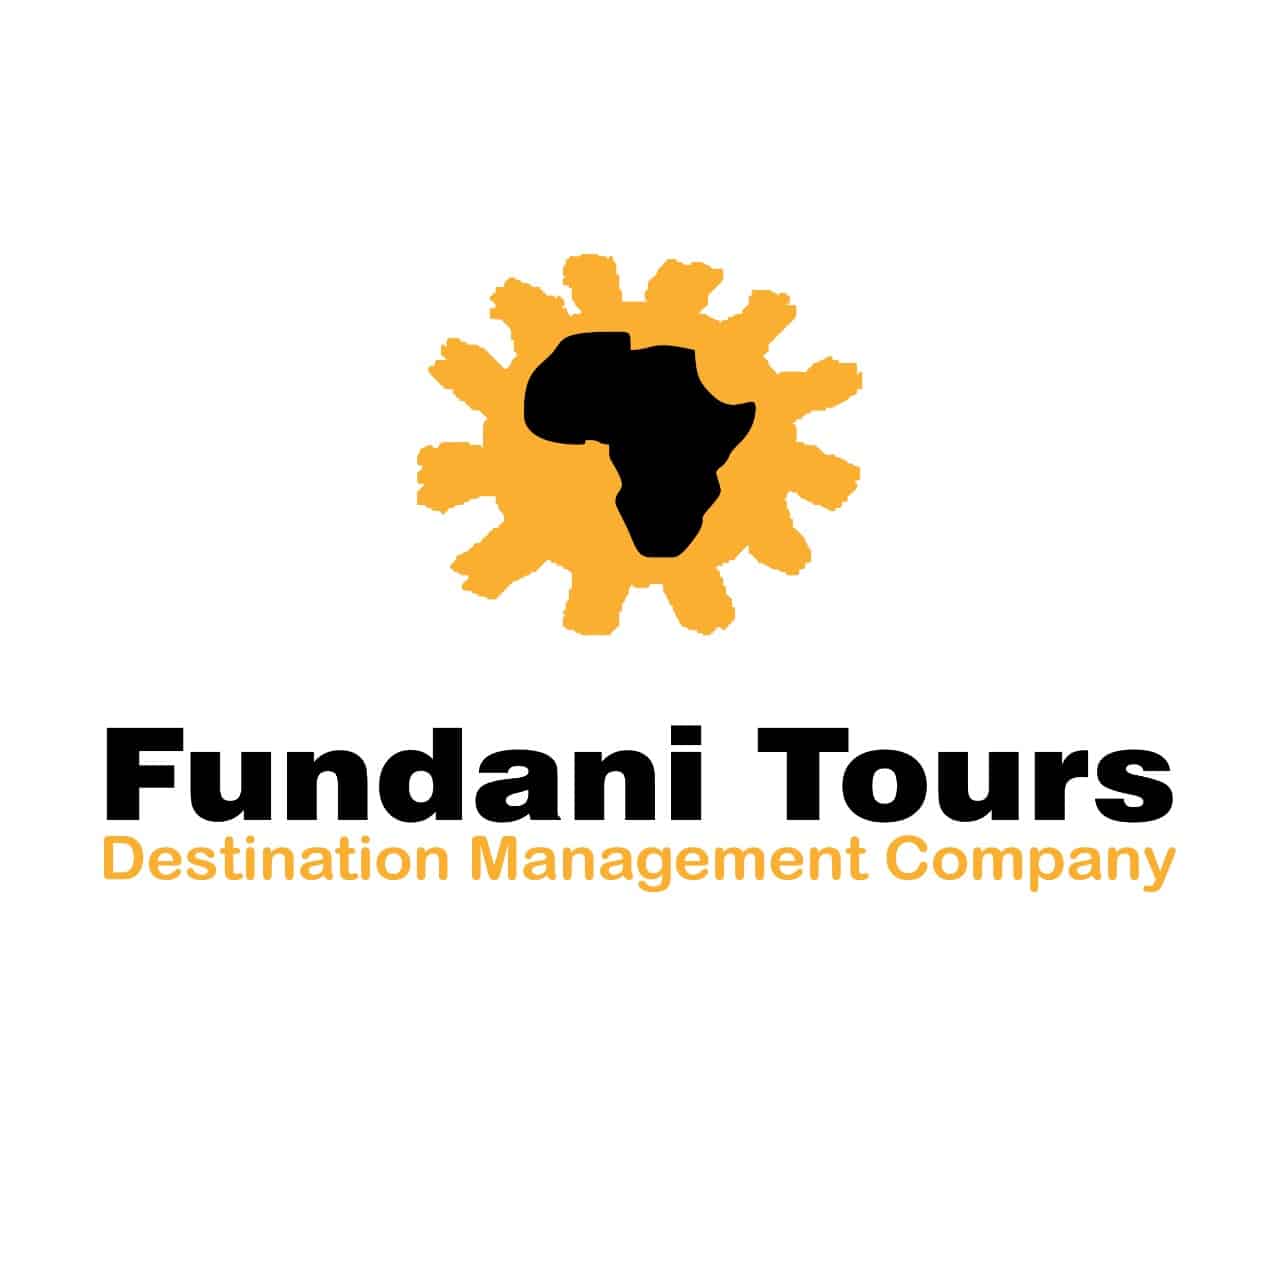 Fundani Tours